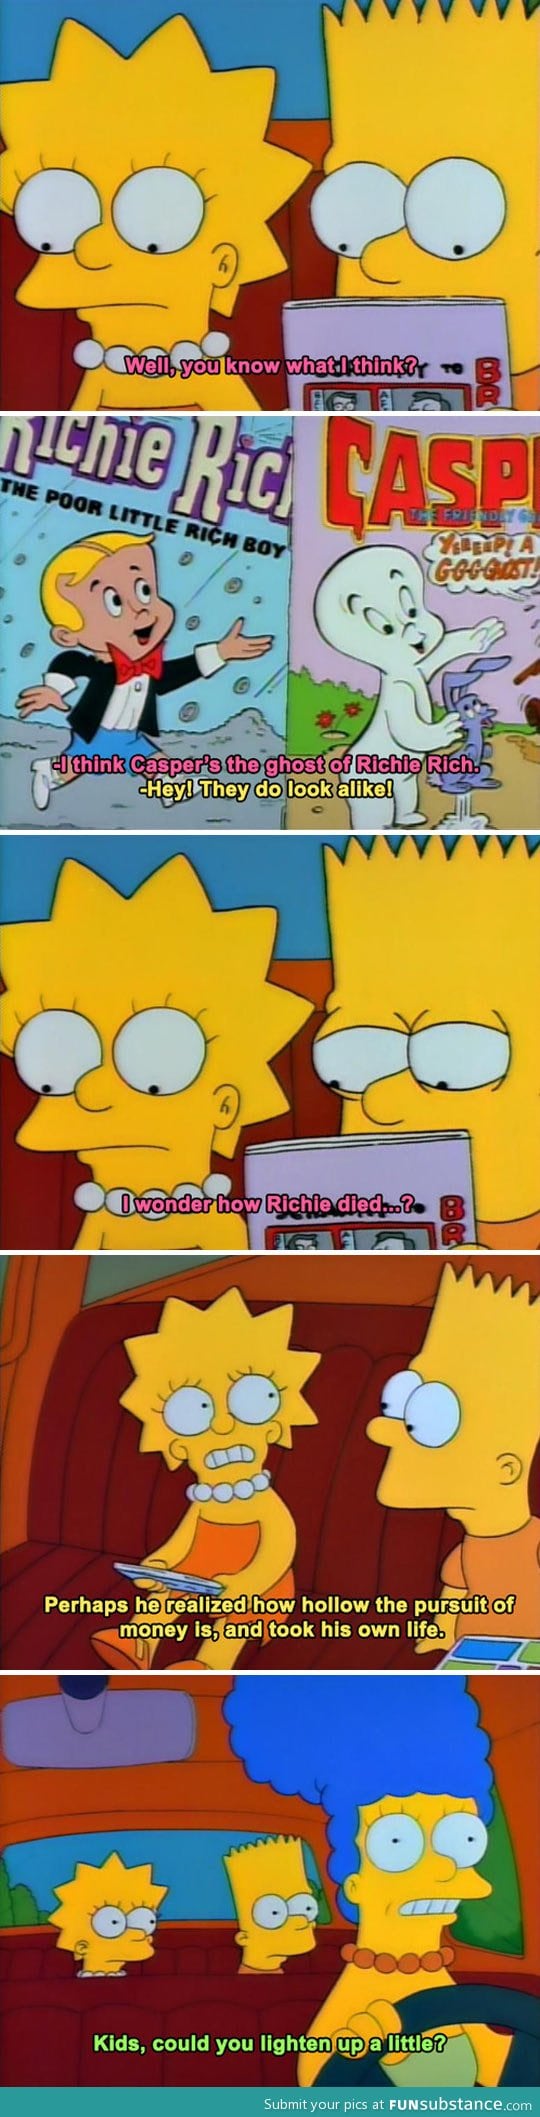 The Simpsons had some heavy stuff